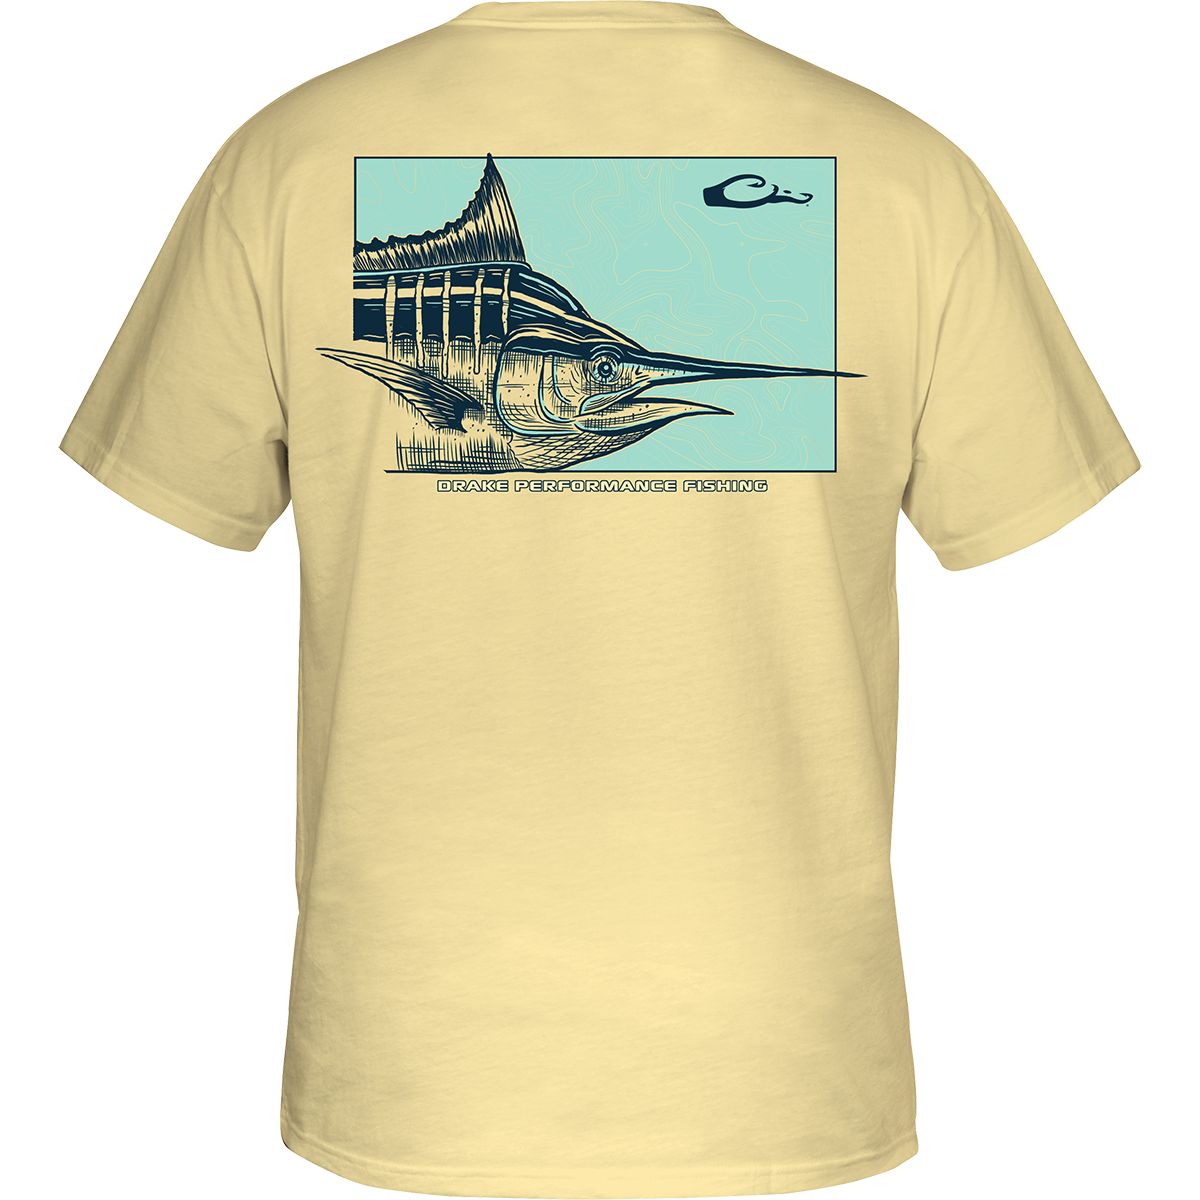 Drake Clothing Co. Cruising Marlin Short-Sleeve Tee - L